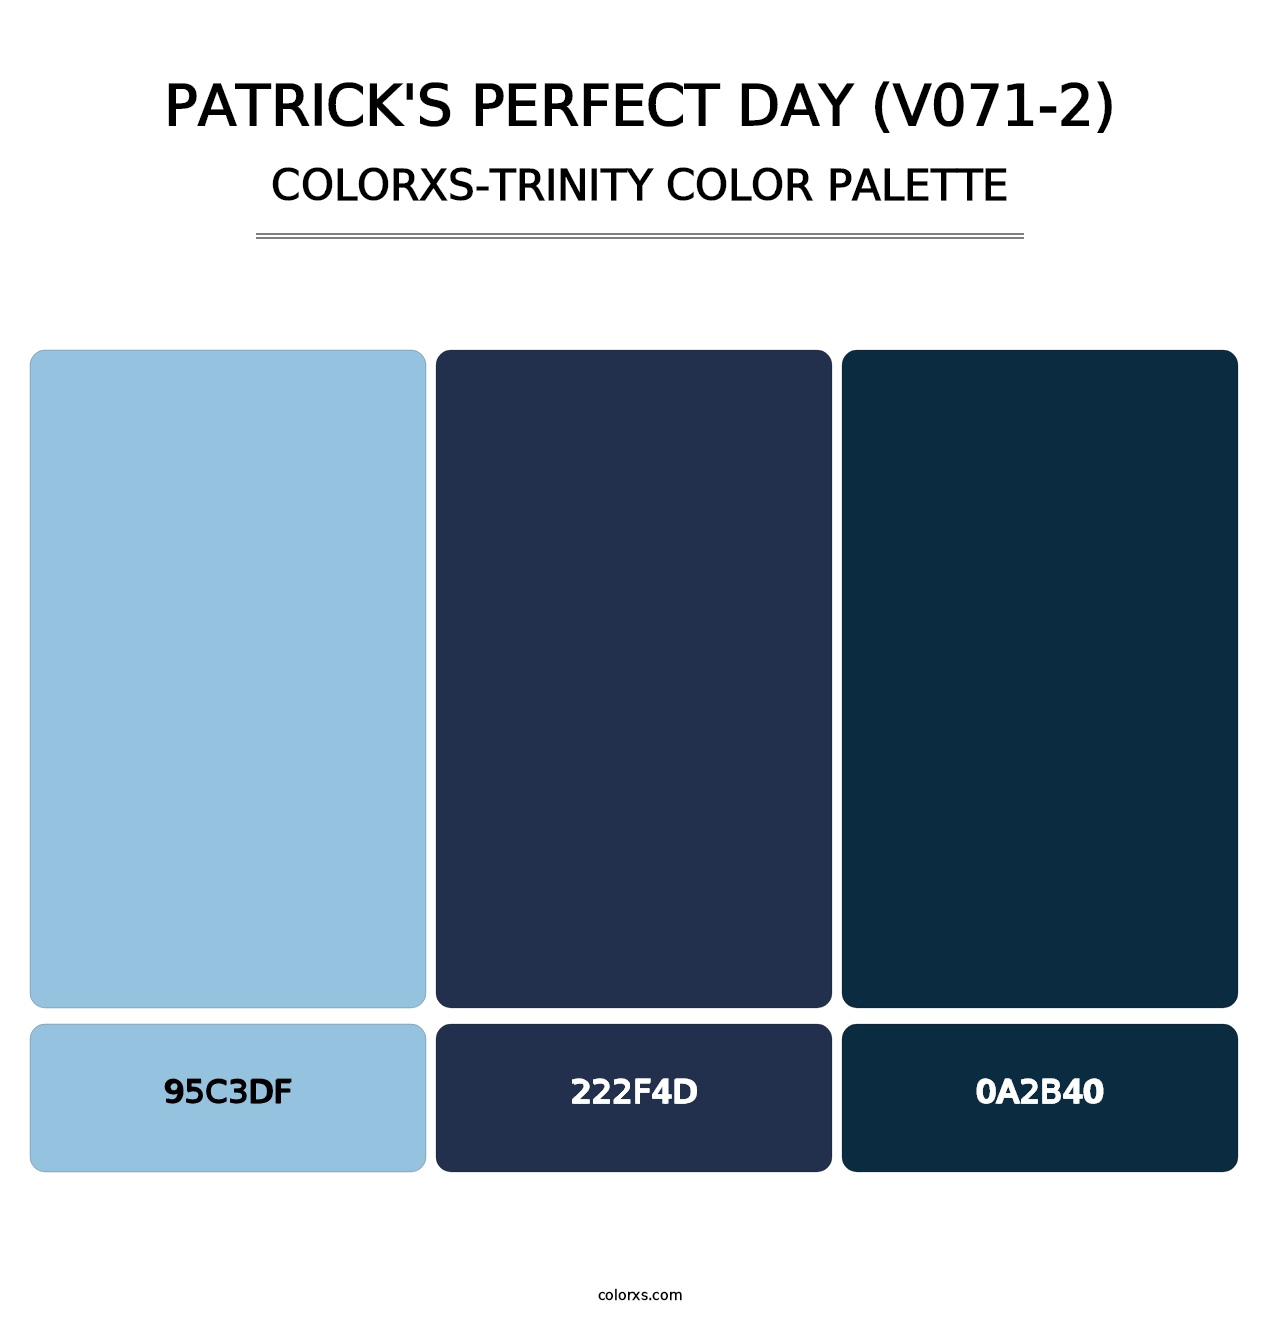 Patrick's Perfect Day (V071-2) - Colorxs Trinity Palette